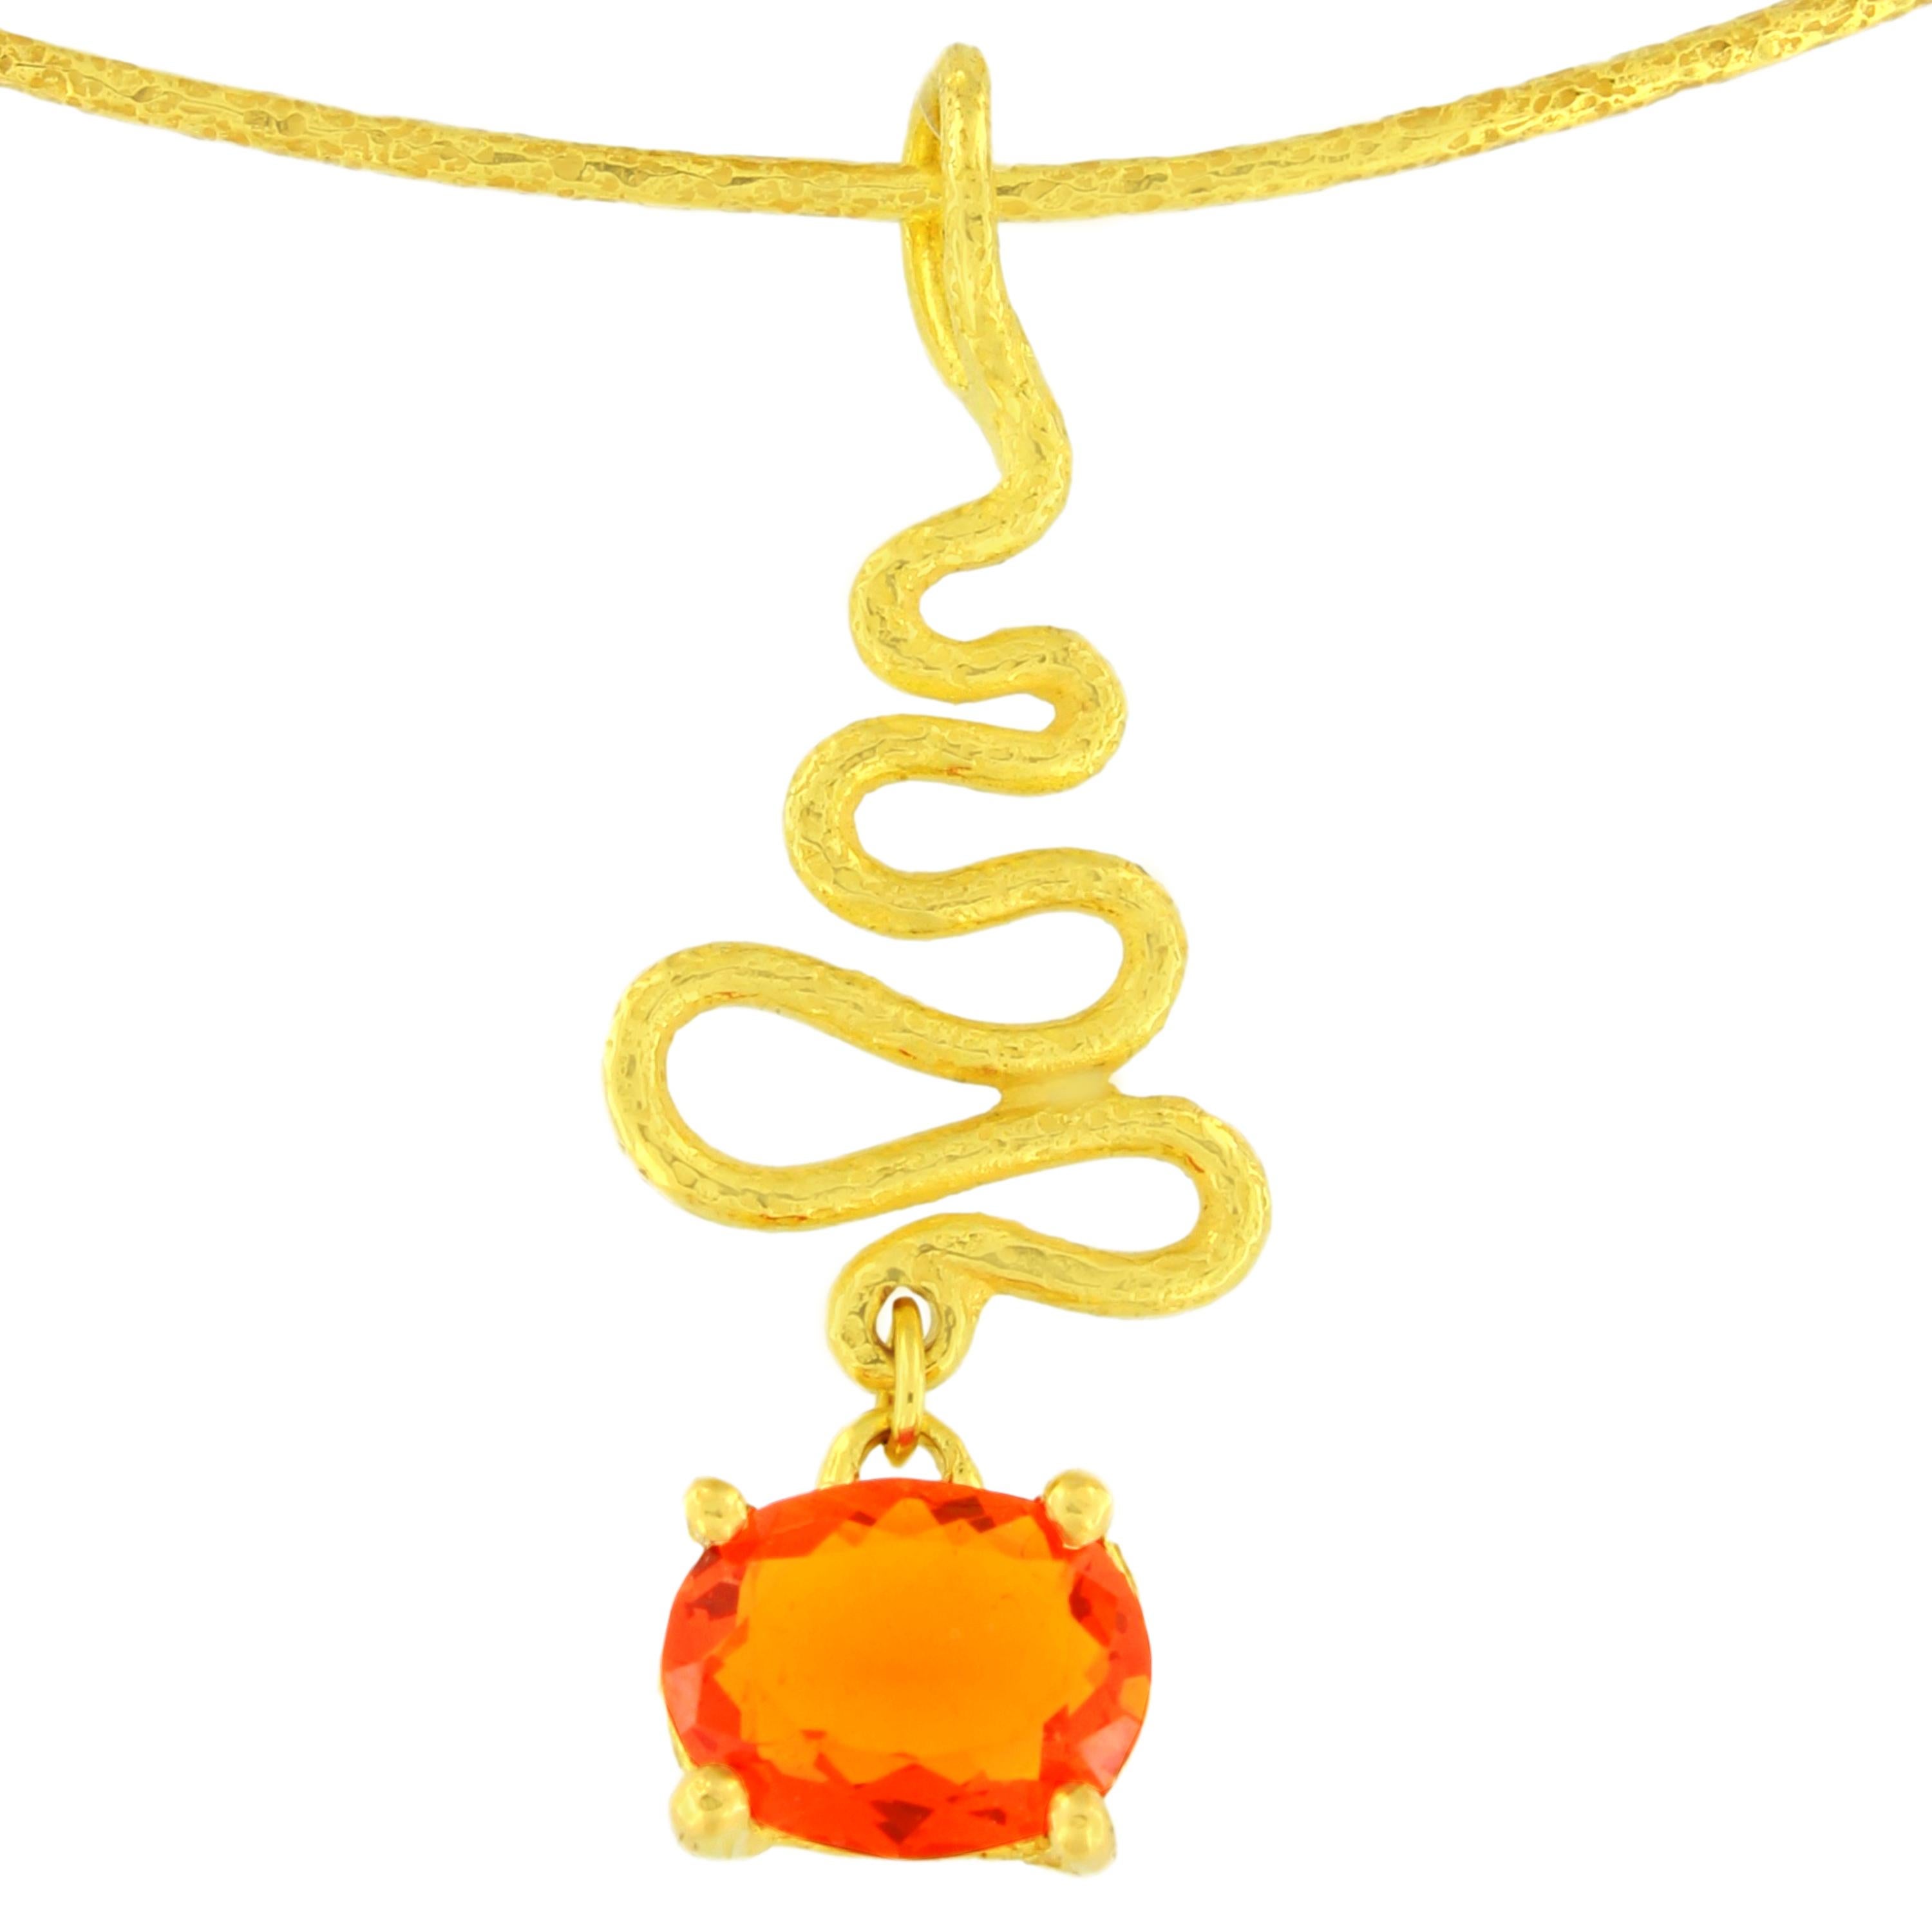 Sacchi Oval Cut Fire Opal Gemstone 18 Karat Satin Yellow Gold Pendant Necklace